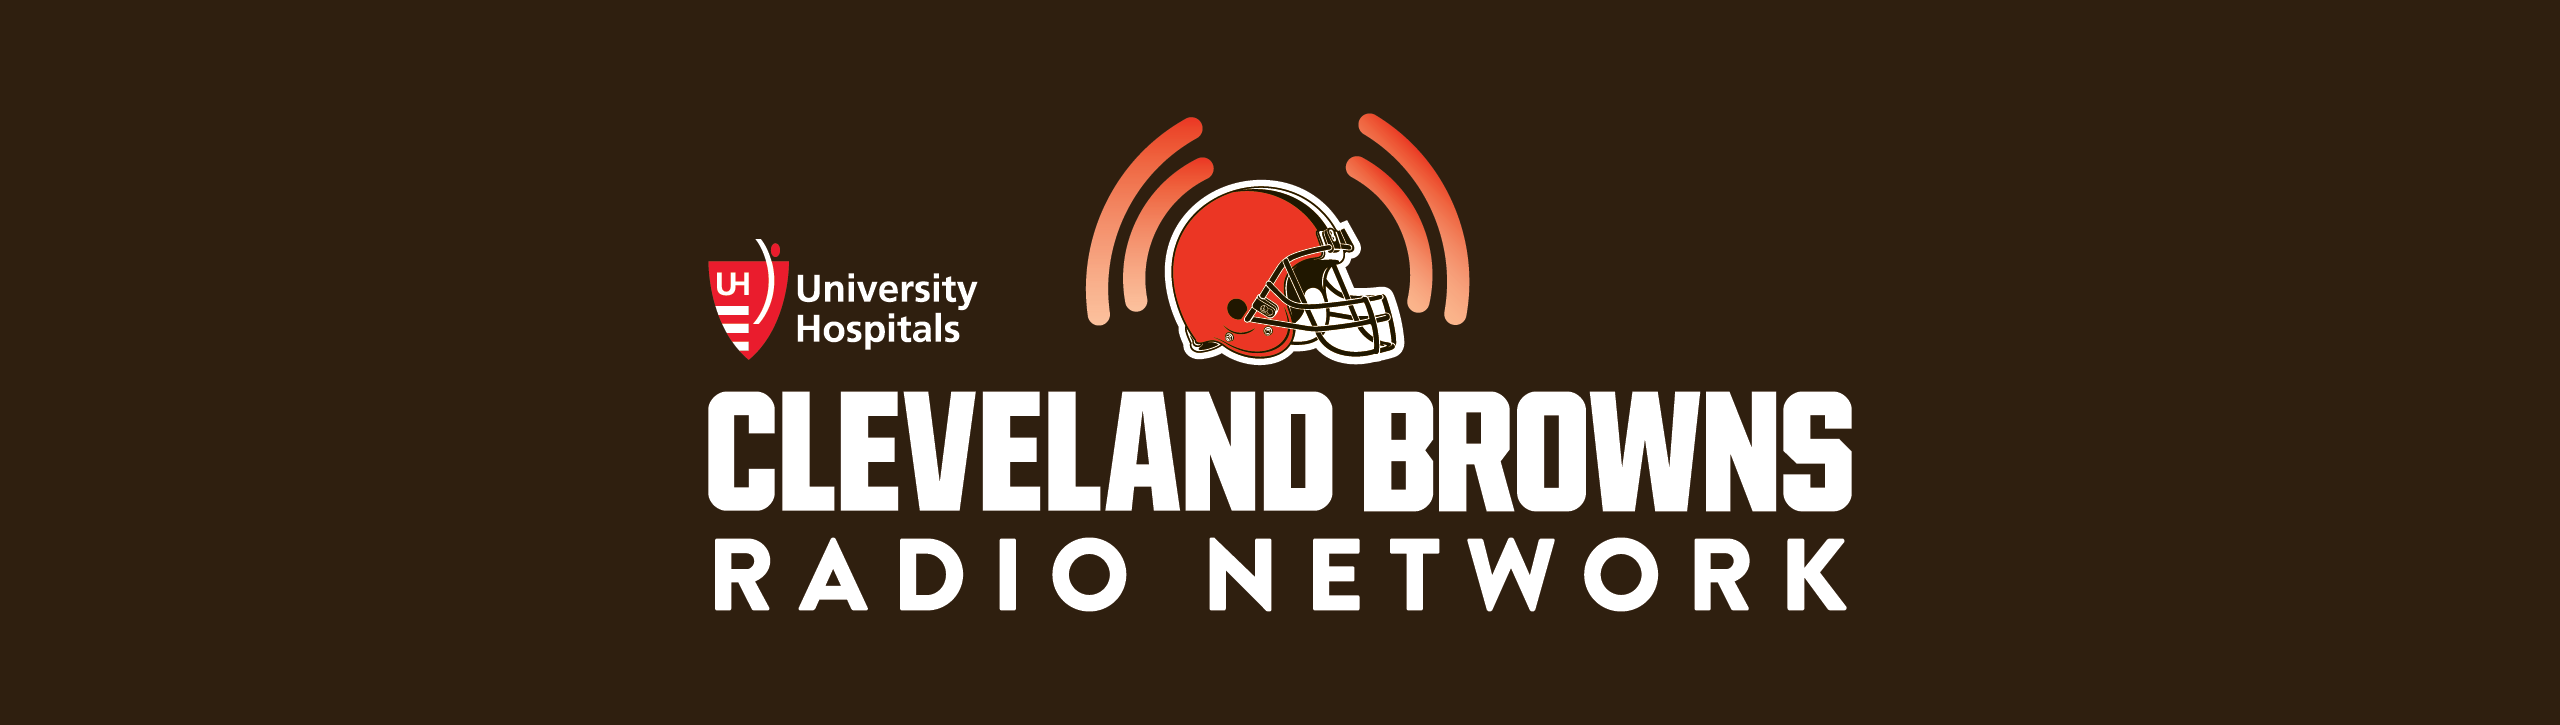 Browns Radio Network  Cleveland Browns 